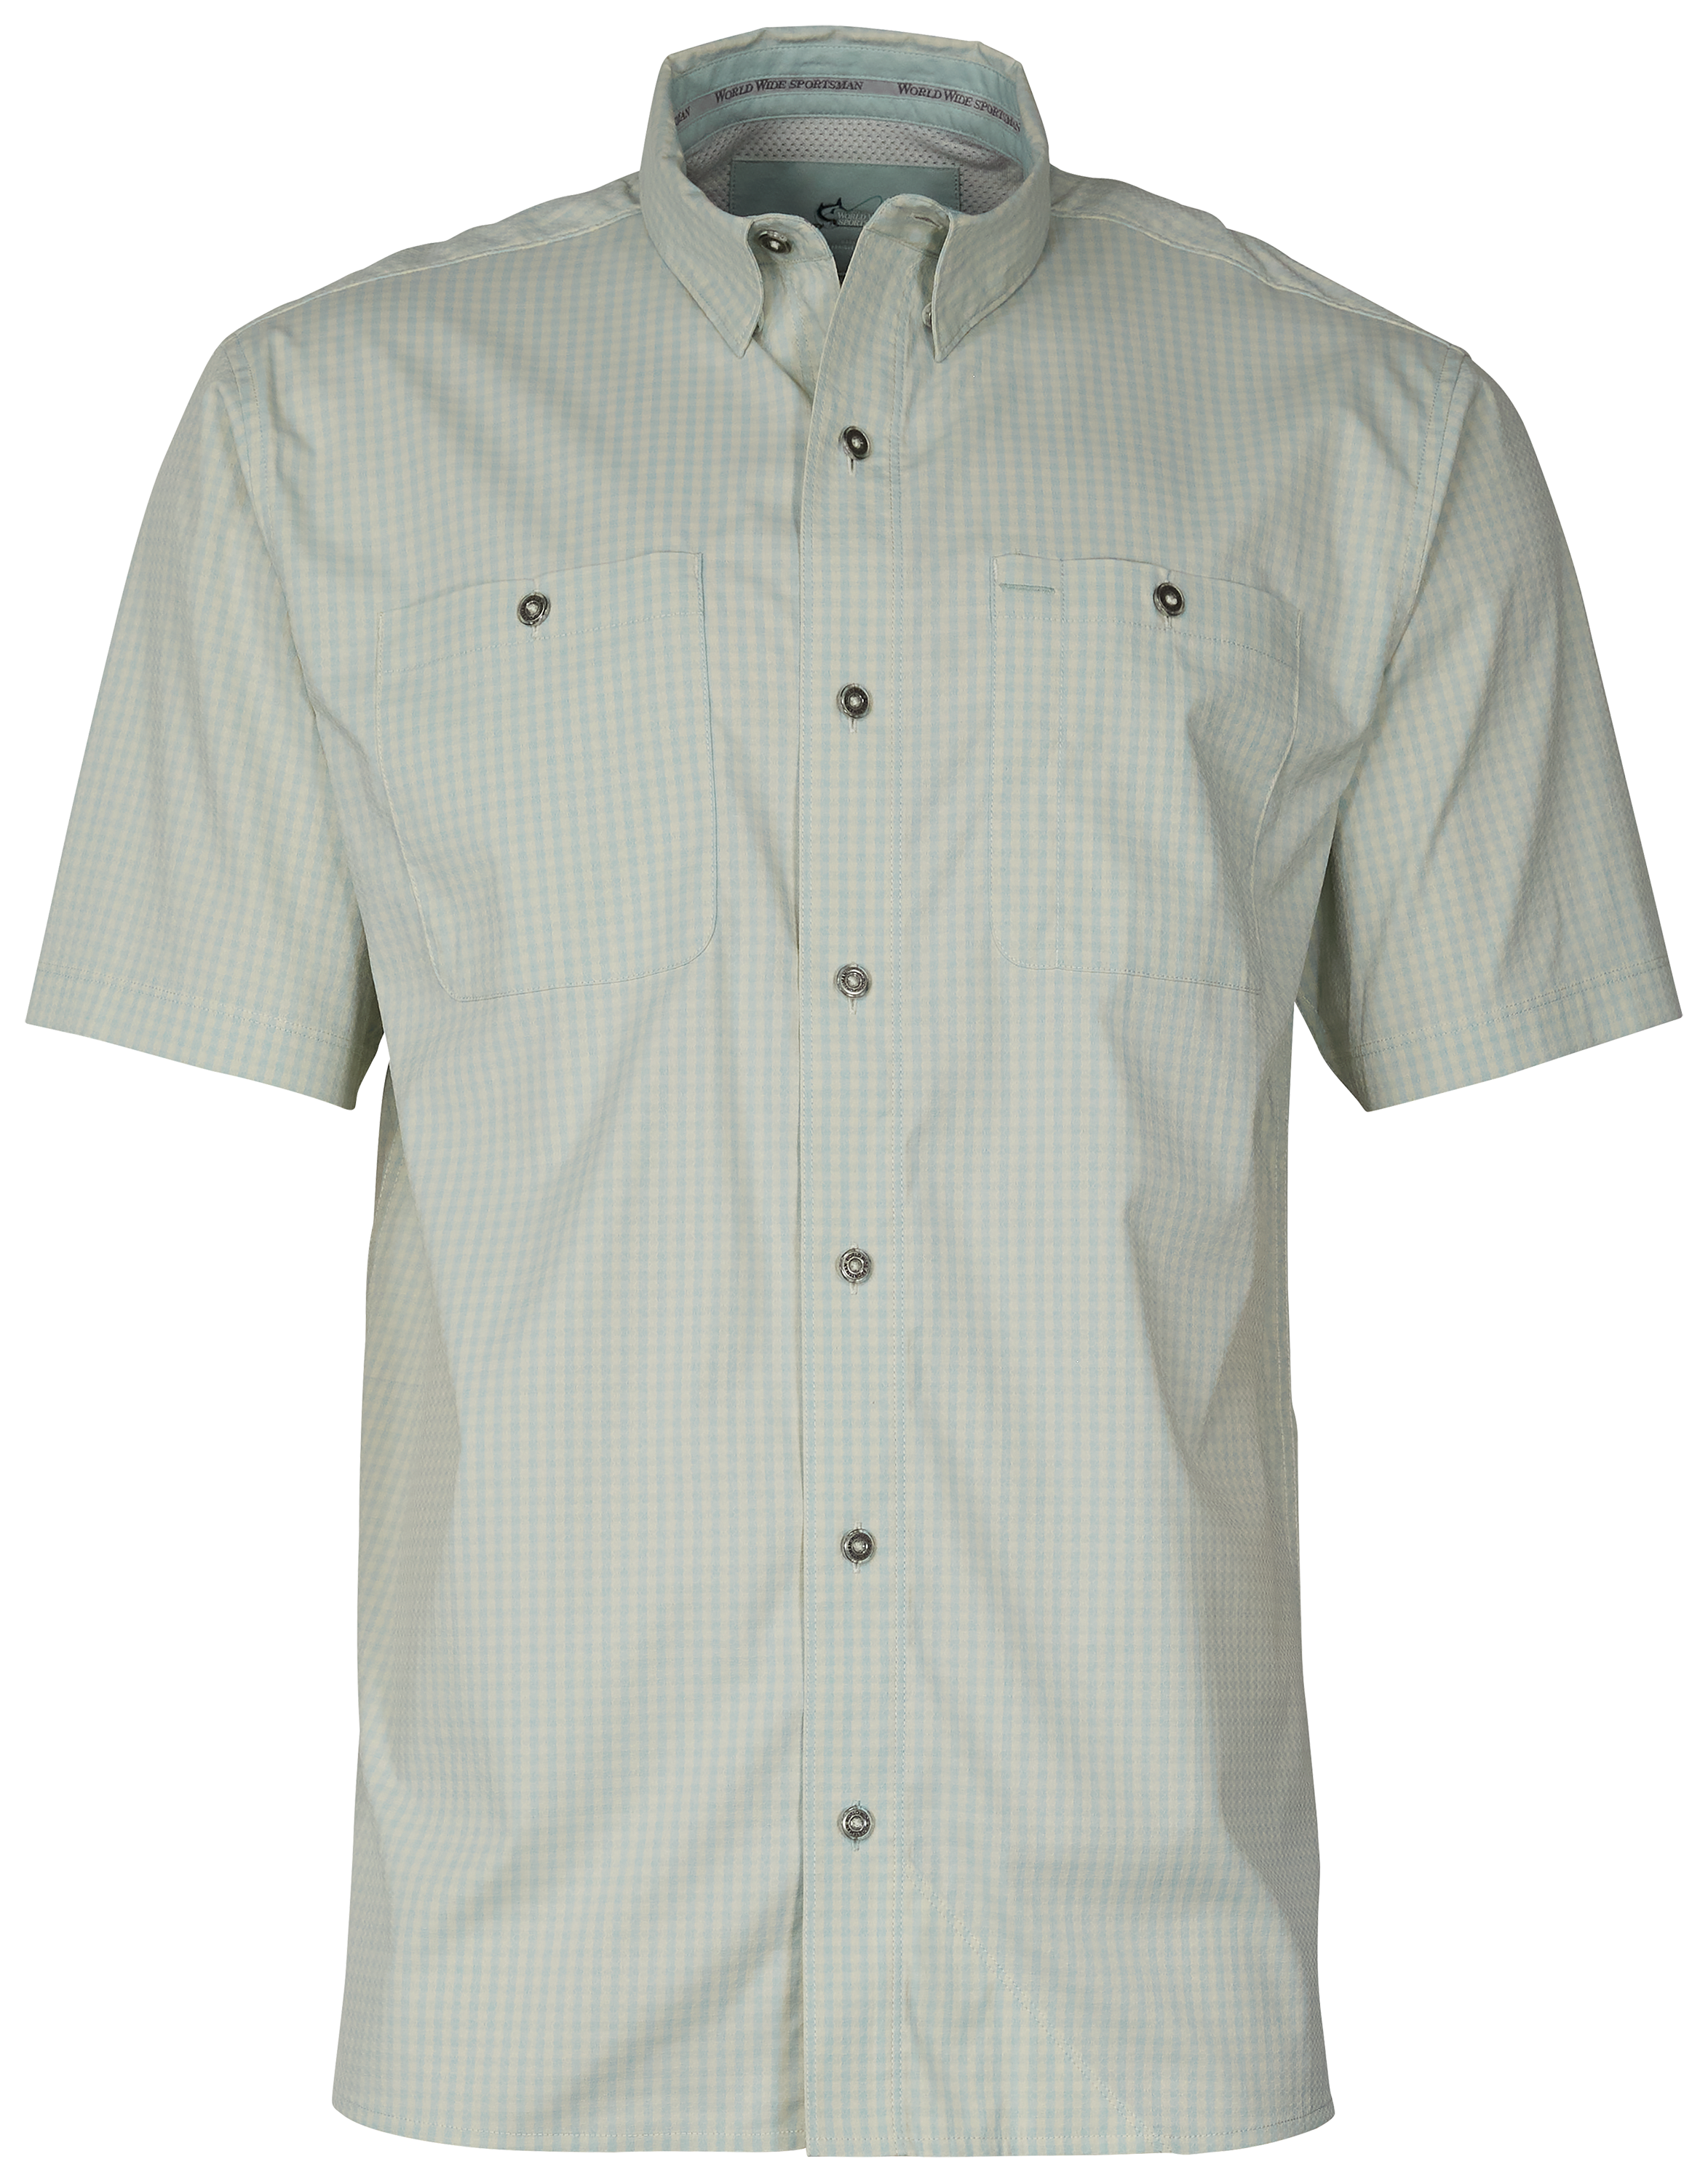 World Wide Sportsman Ultimate Angler Plaid Short-Sleeve Shirt for Men - Harbor Gray Gingham - 3XL